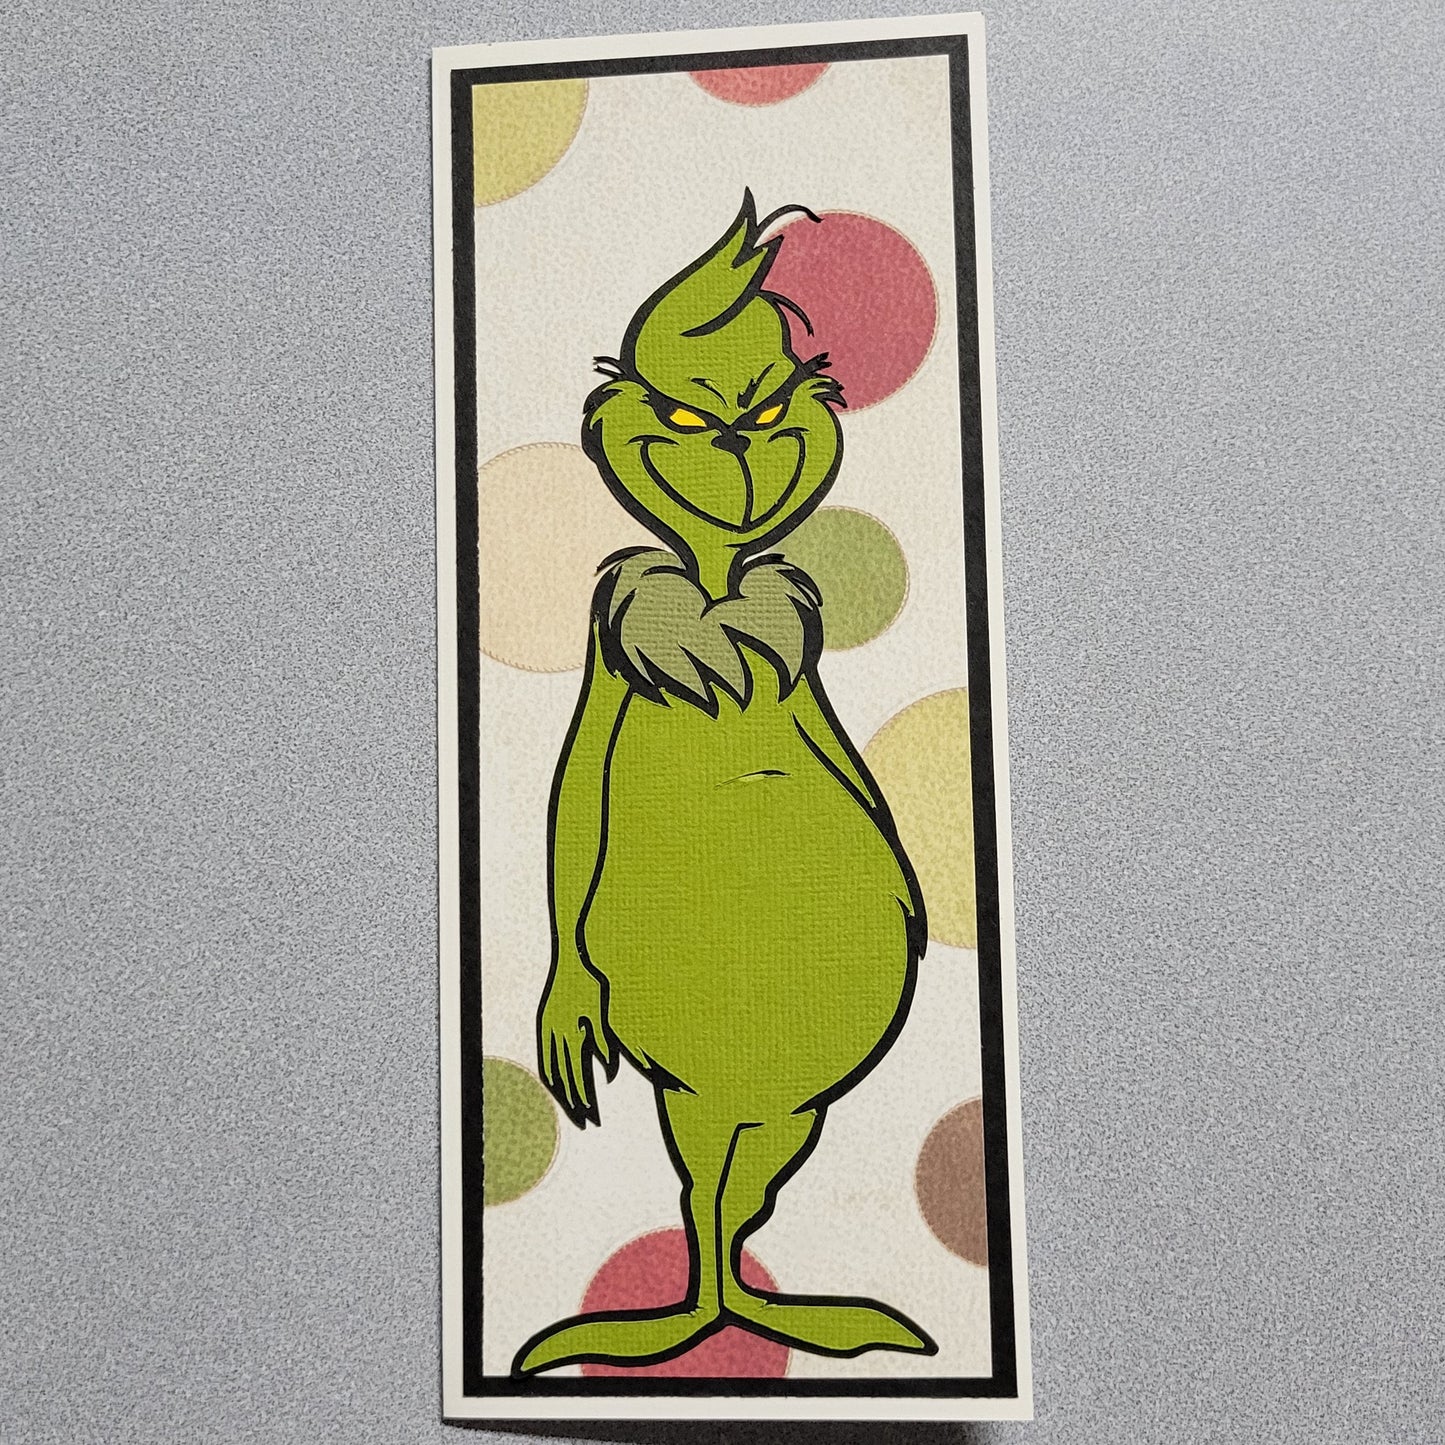 Grinch 2 Christmas Card